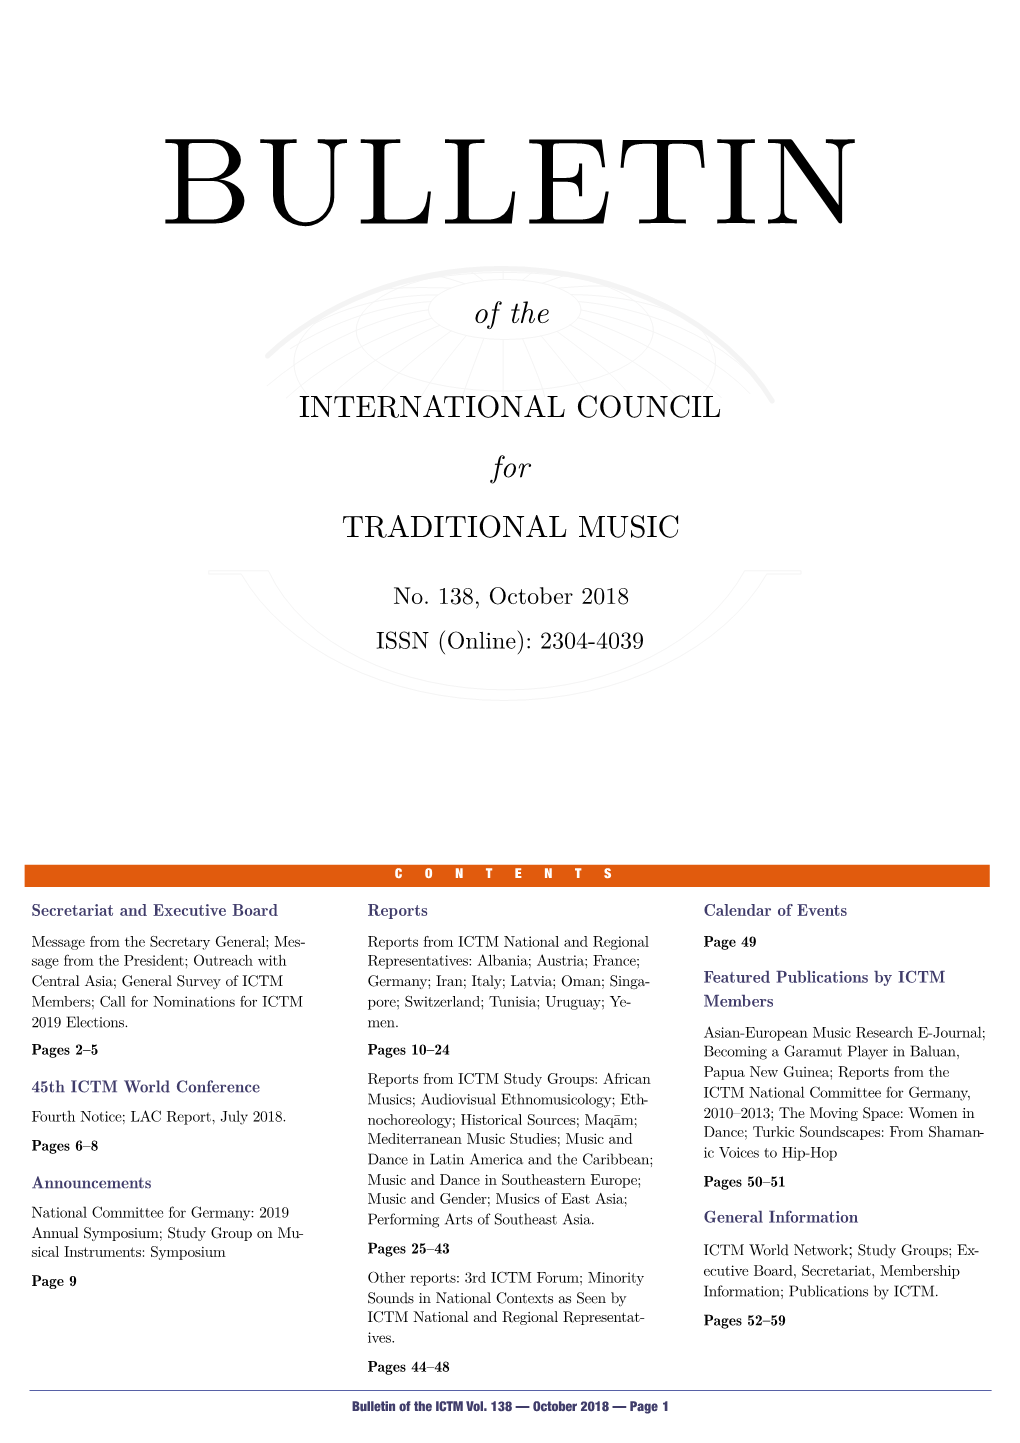 Bulletin of the ICTM Vol. 138 (October 2018)